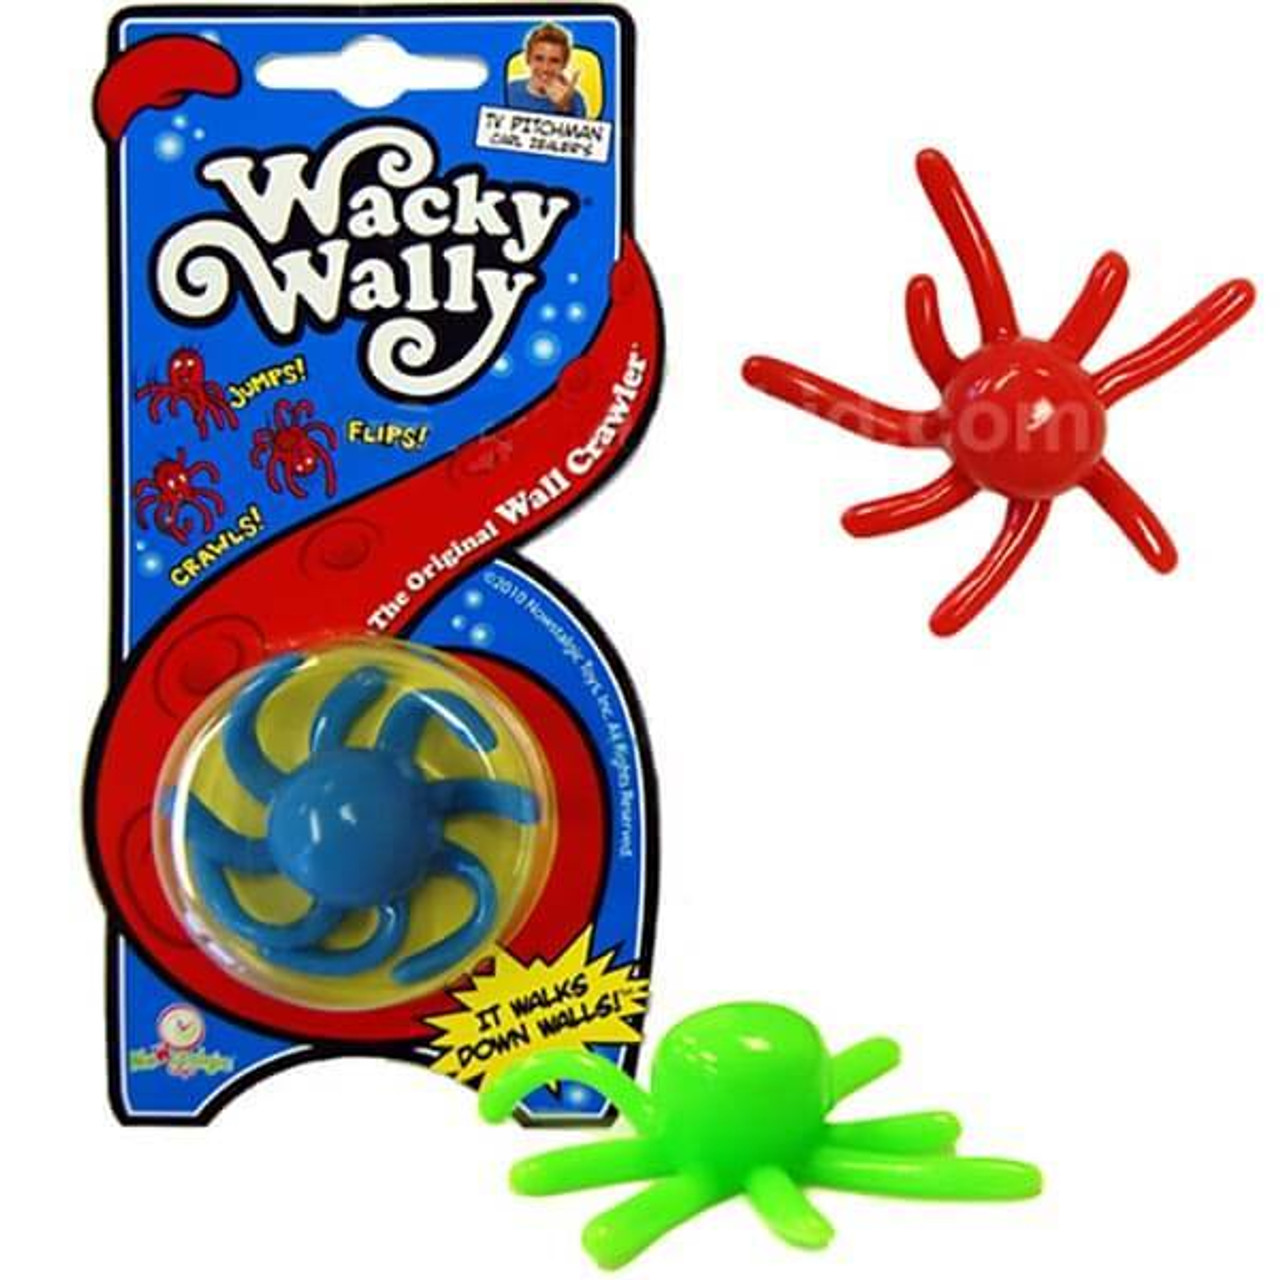 The Original Wacky Wally Wall Crawler 